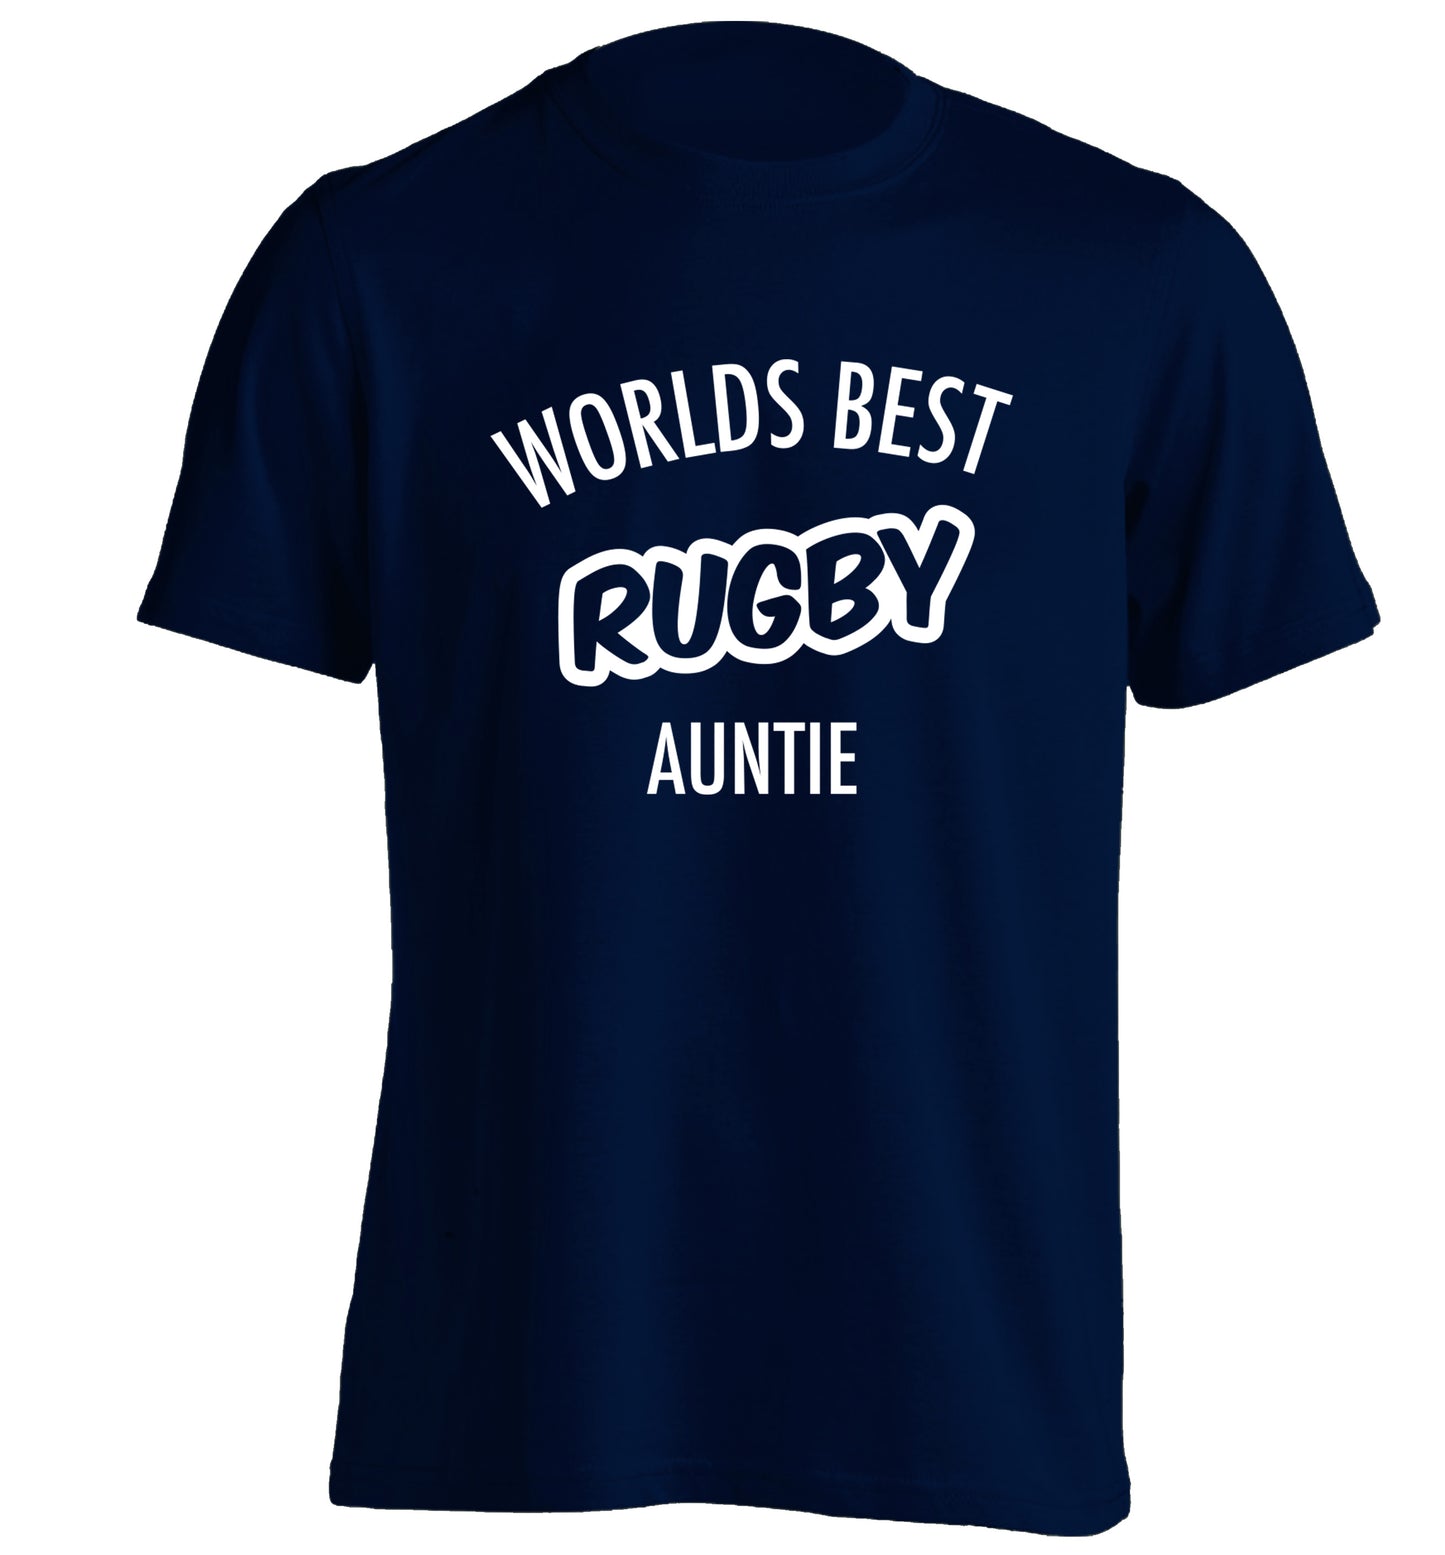 Worlds best rugby auntie adults unisex navy Tshirt 2XL